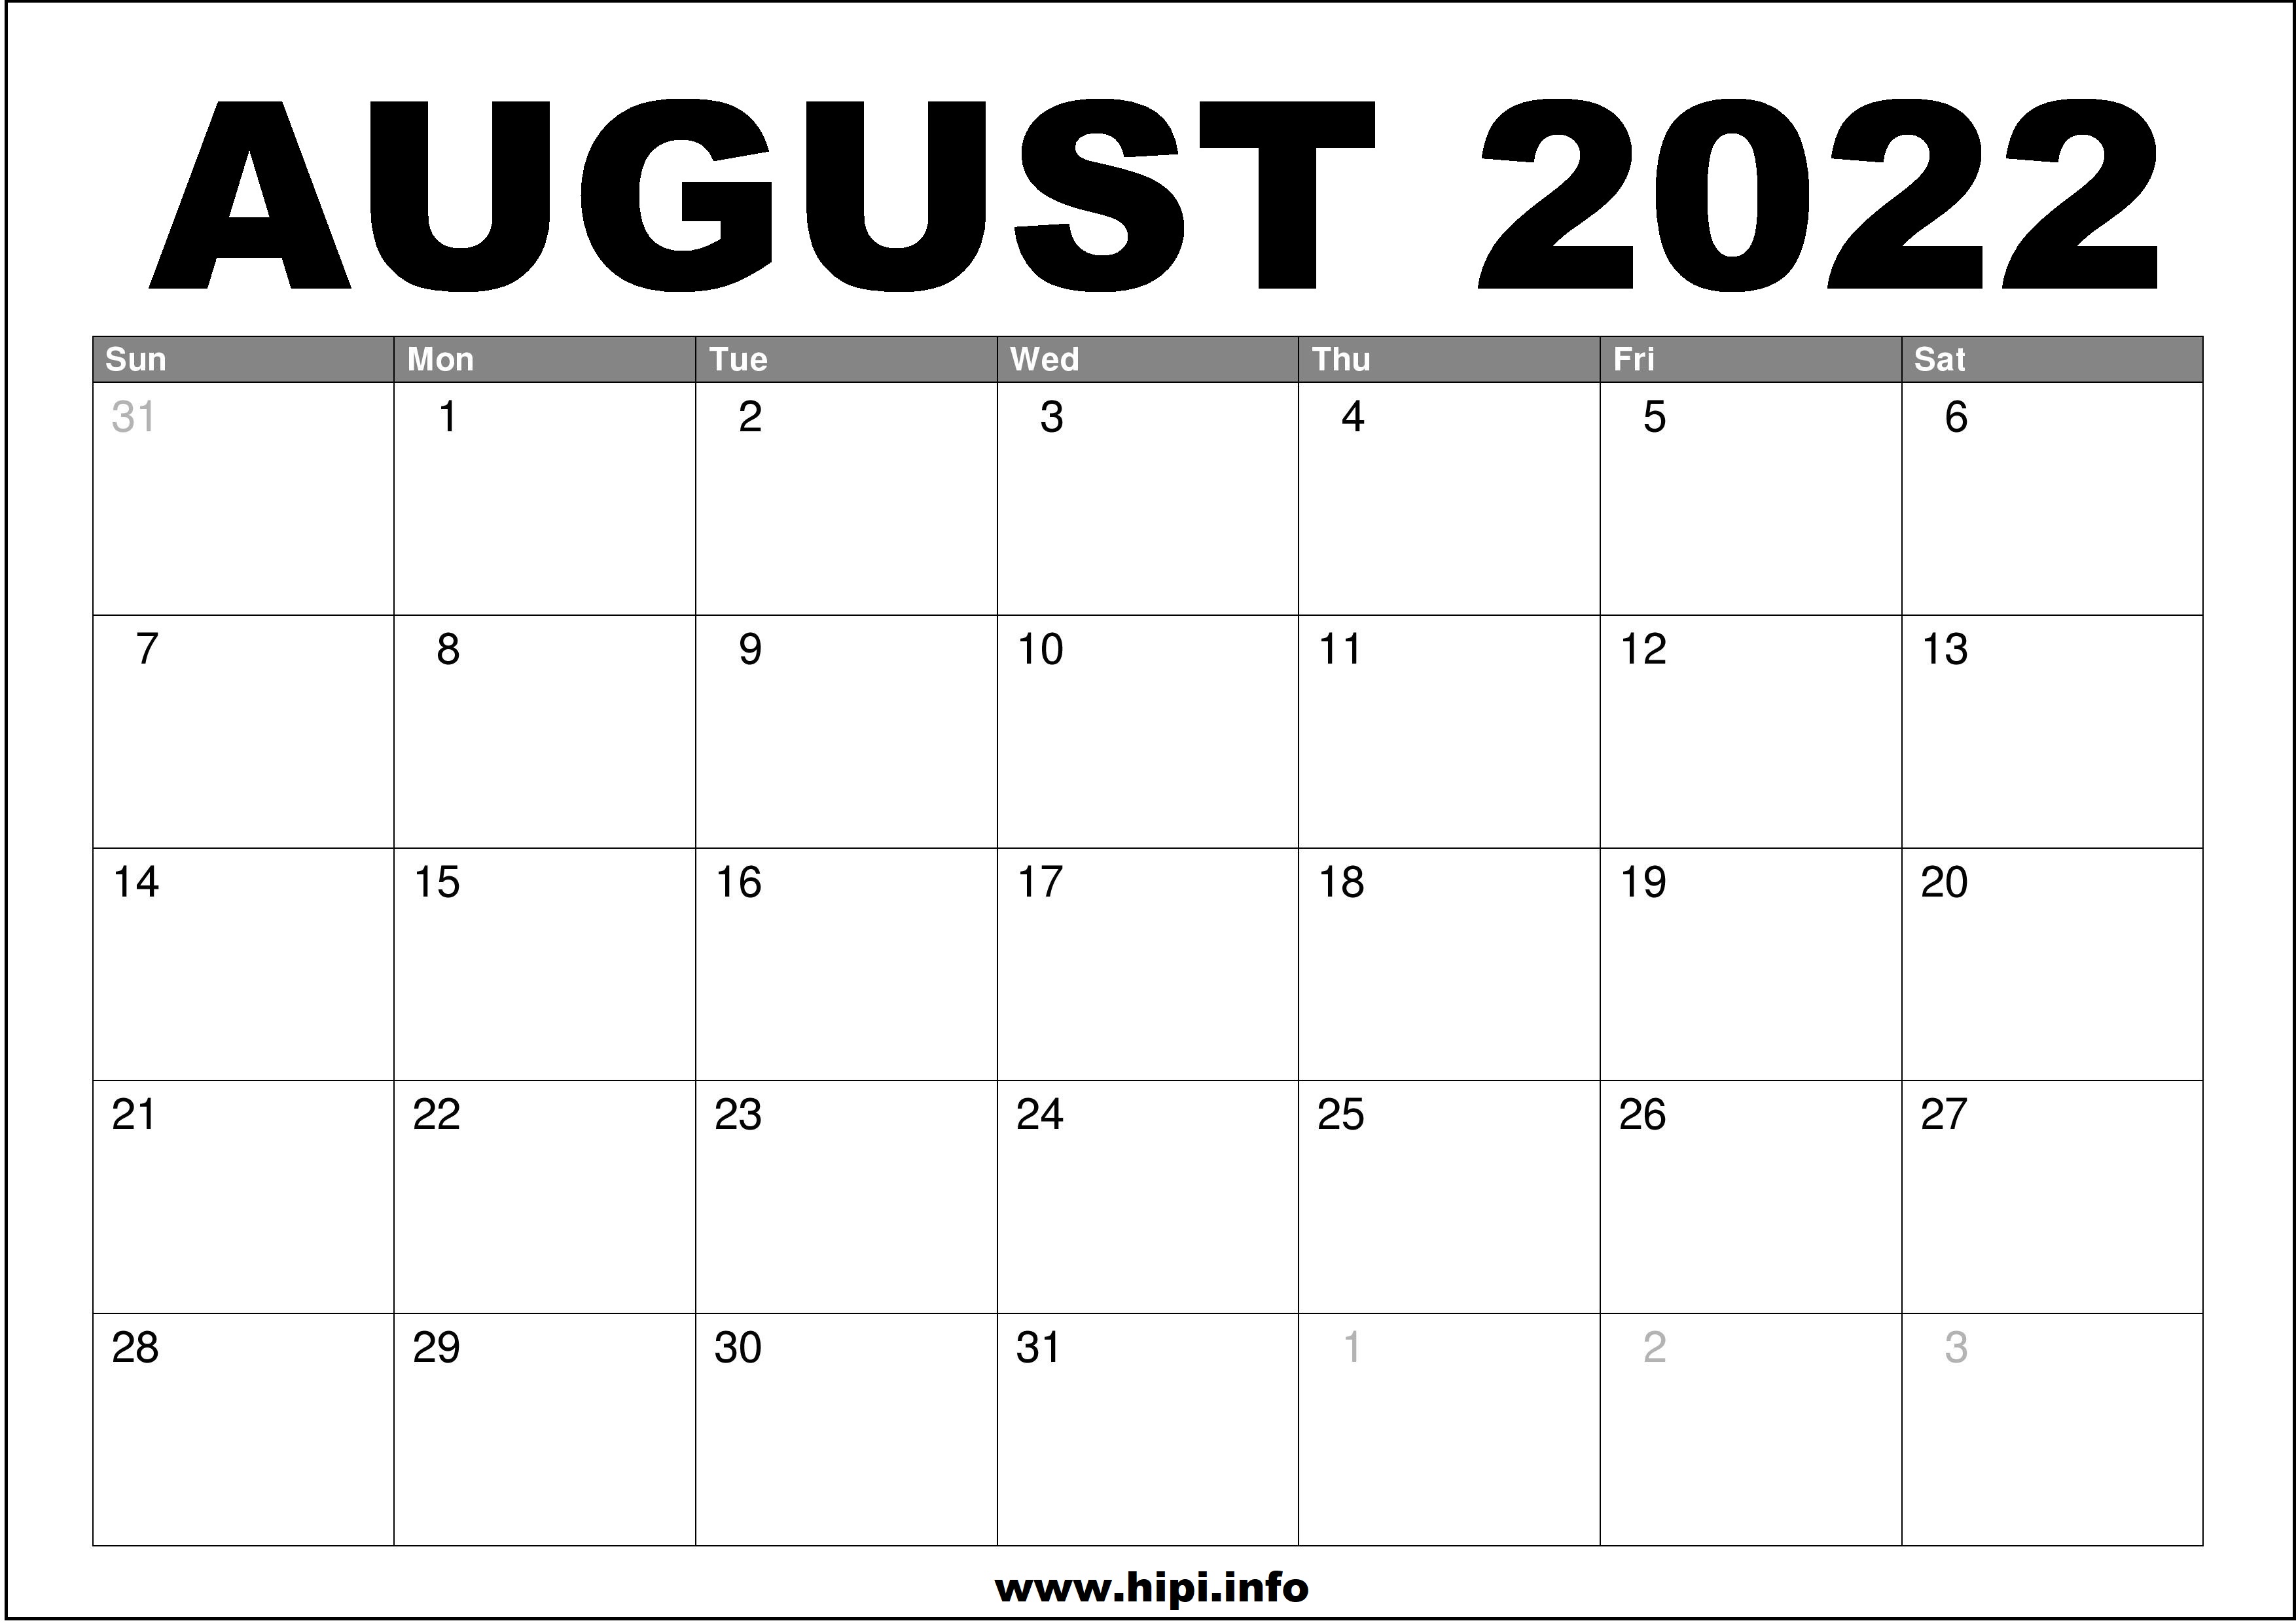 August 2022 Calendar Printable Free Hipi Info Calendars Printable Free